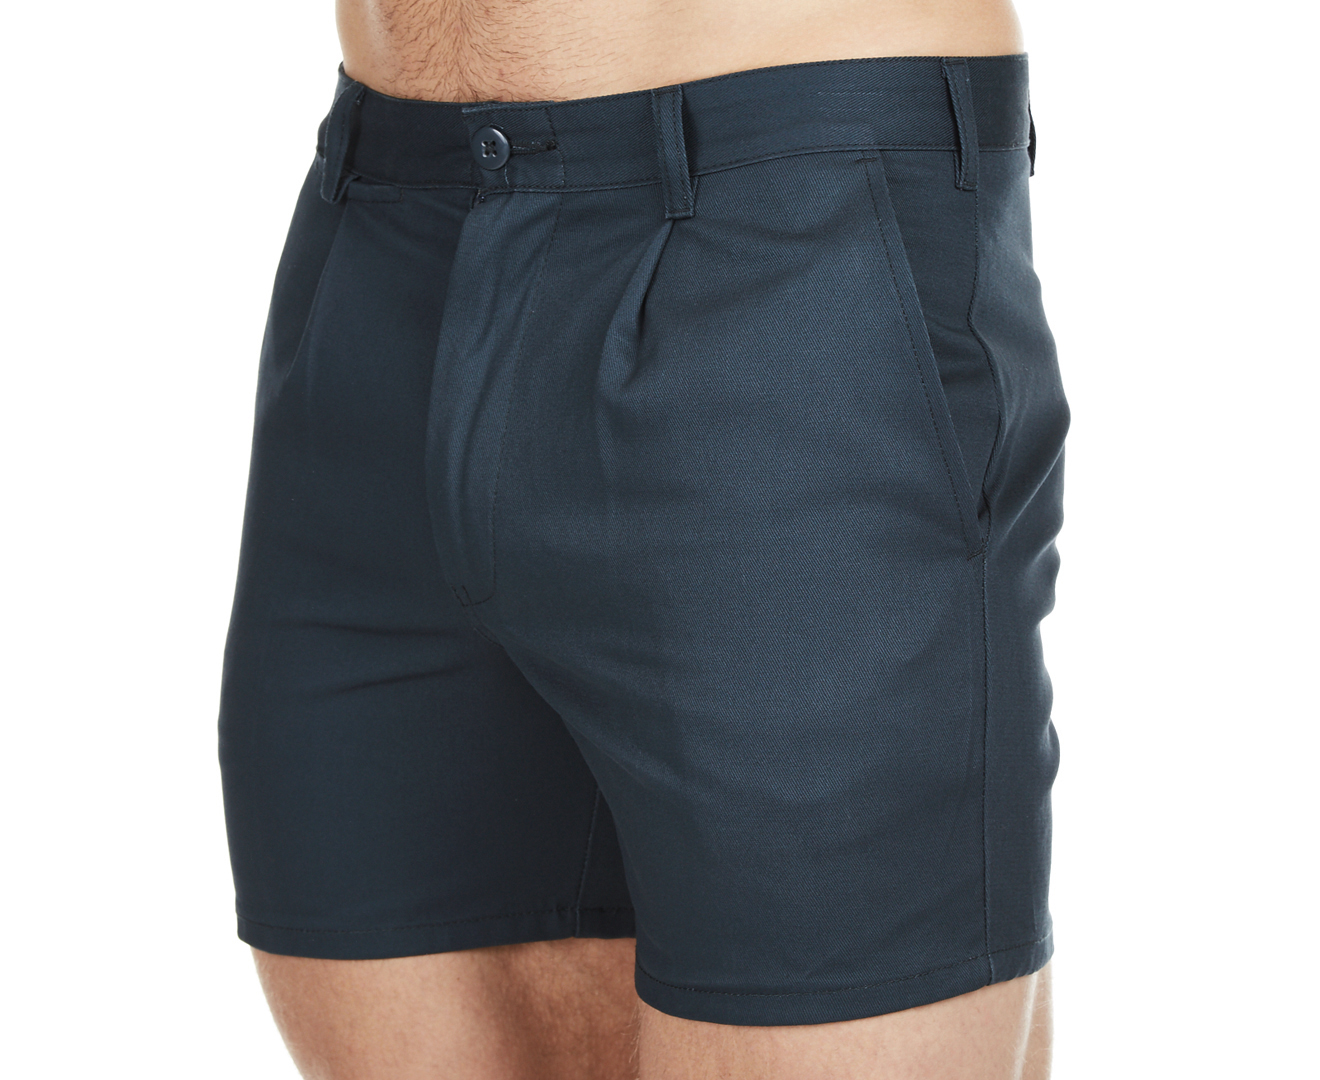 Hard Yakka Men's Utility Shorts w/ Belt Loops - Green | Catch.com.au